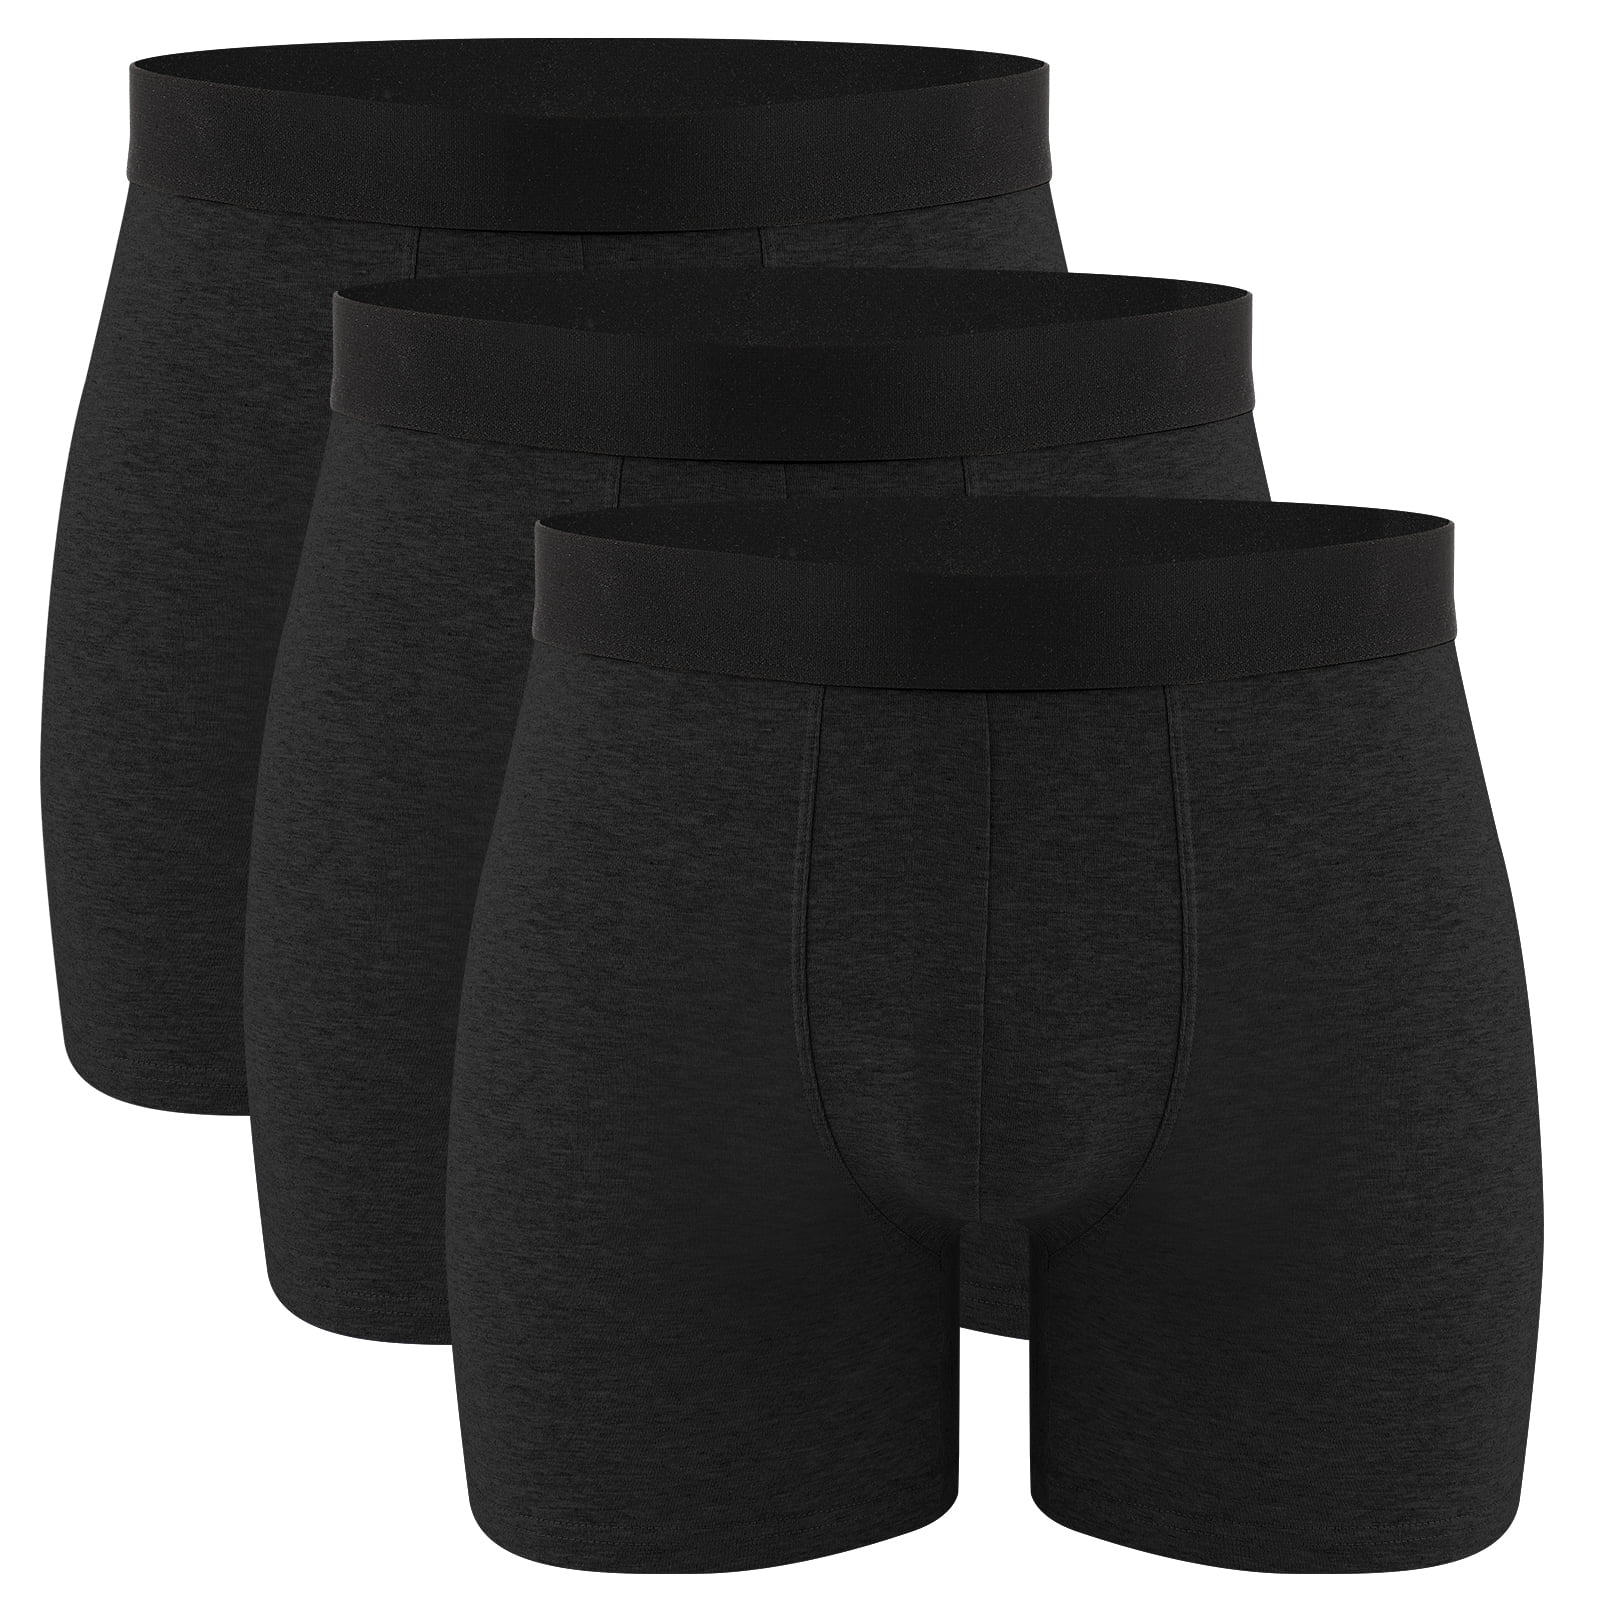 Calvin Klein Men's Black 3-Pack Cotton Stretch Boxer Briefs, Large 